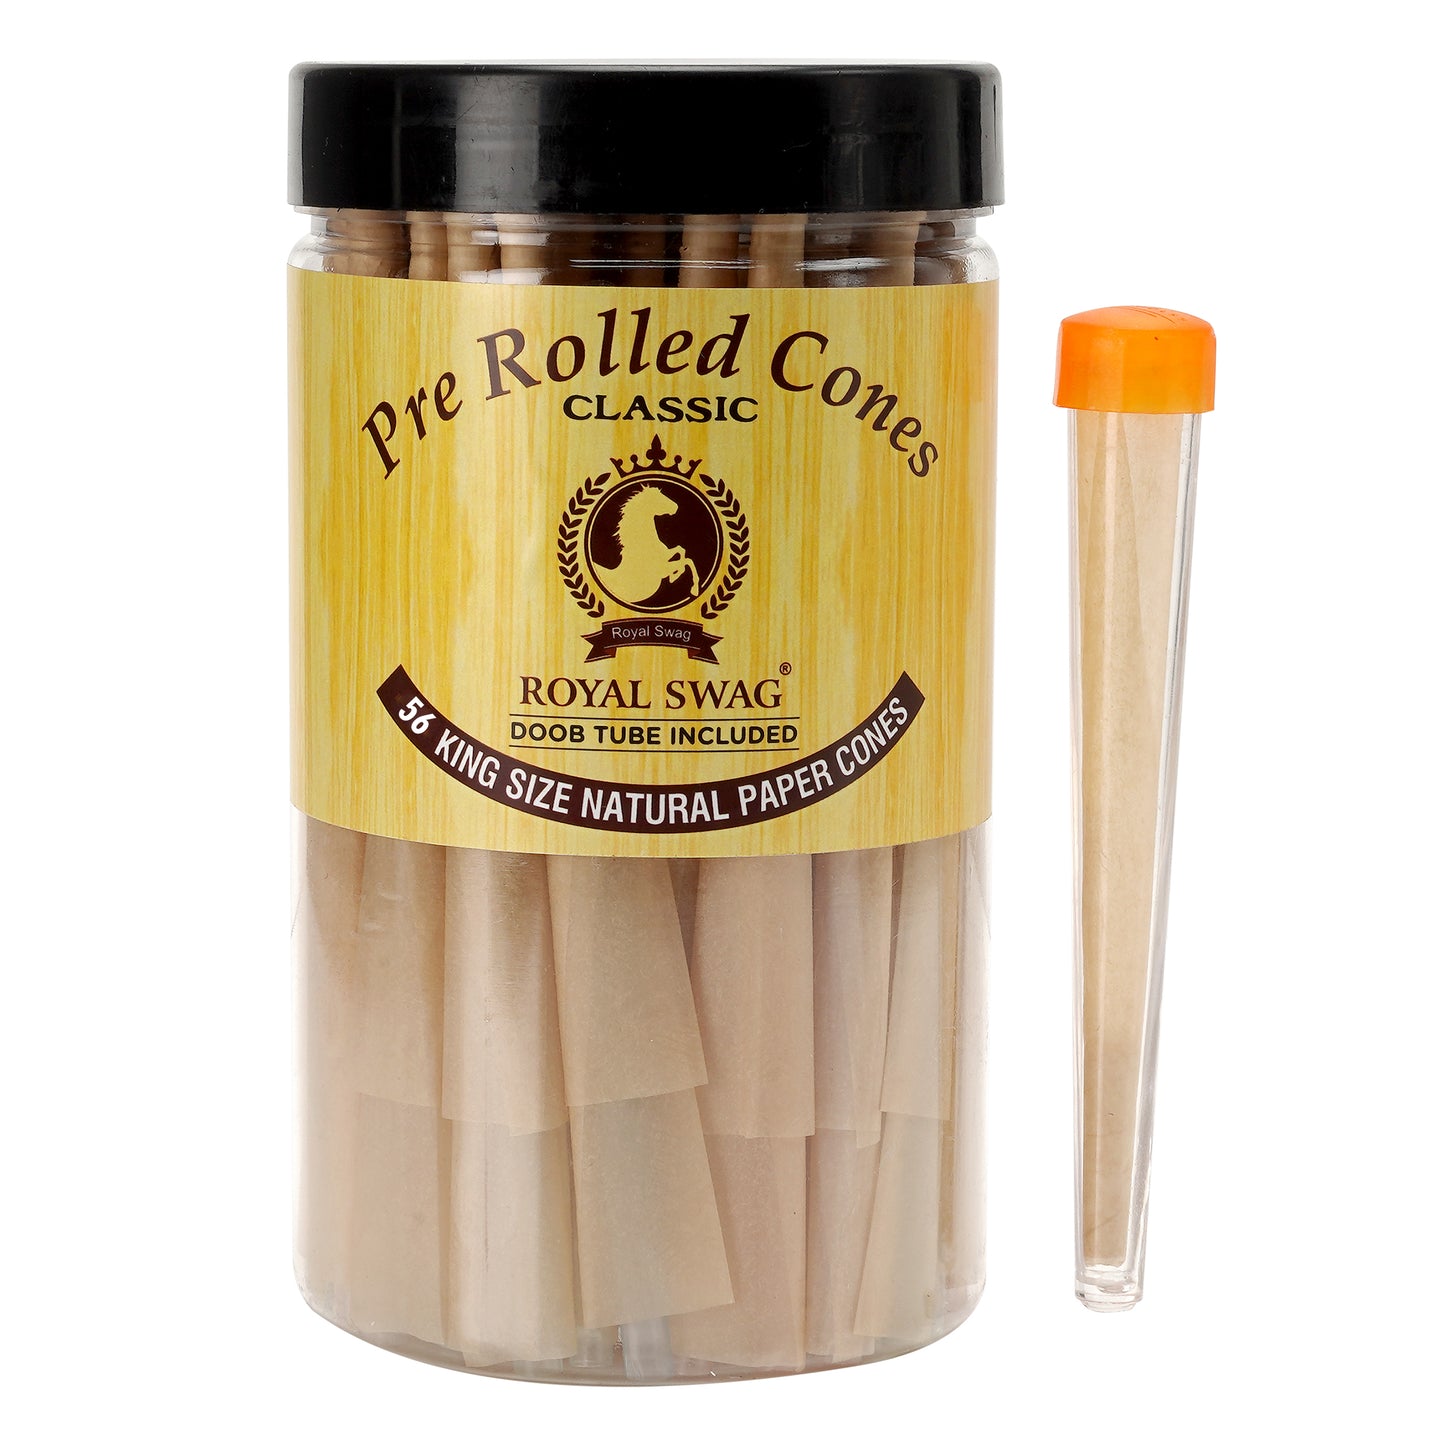 Herbal Pre Rolled Cones